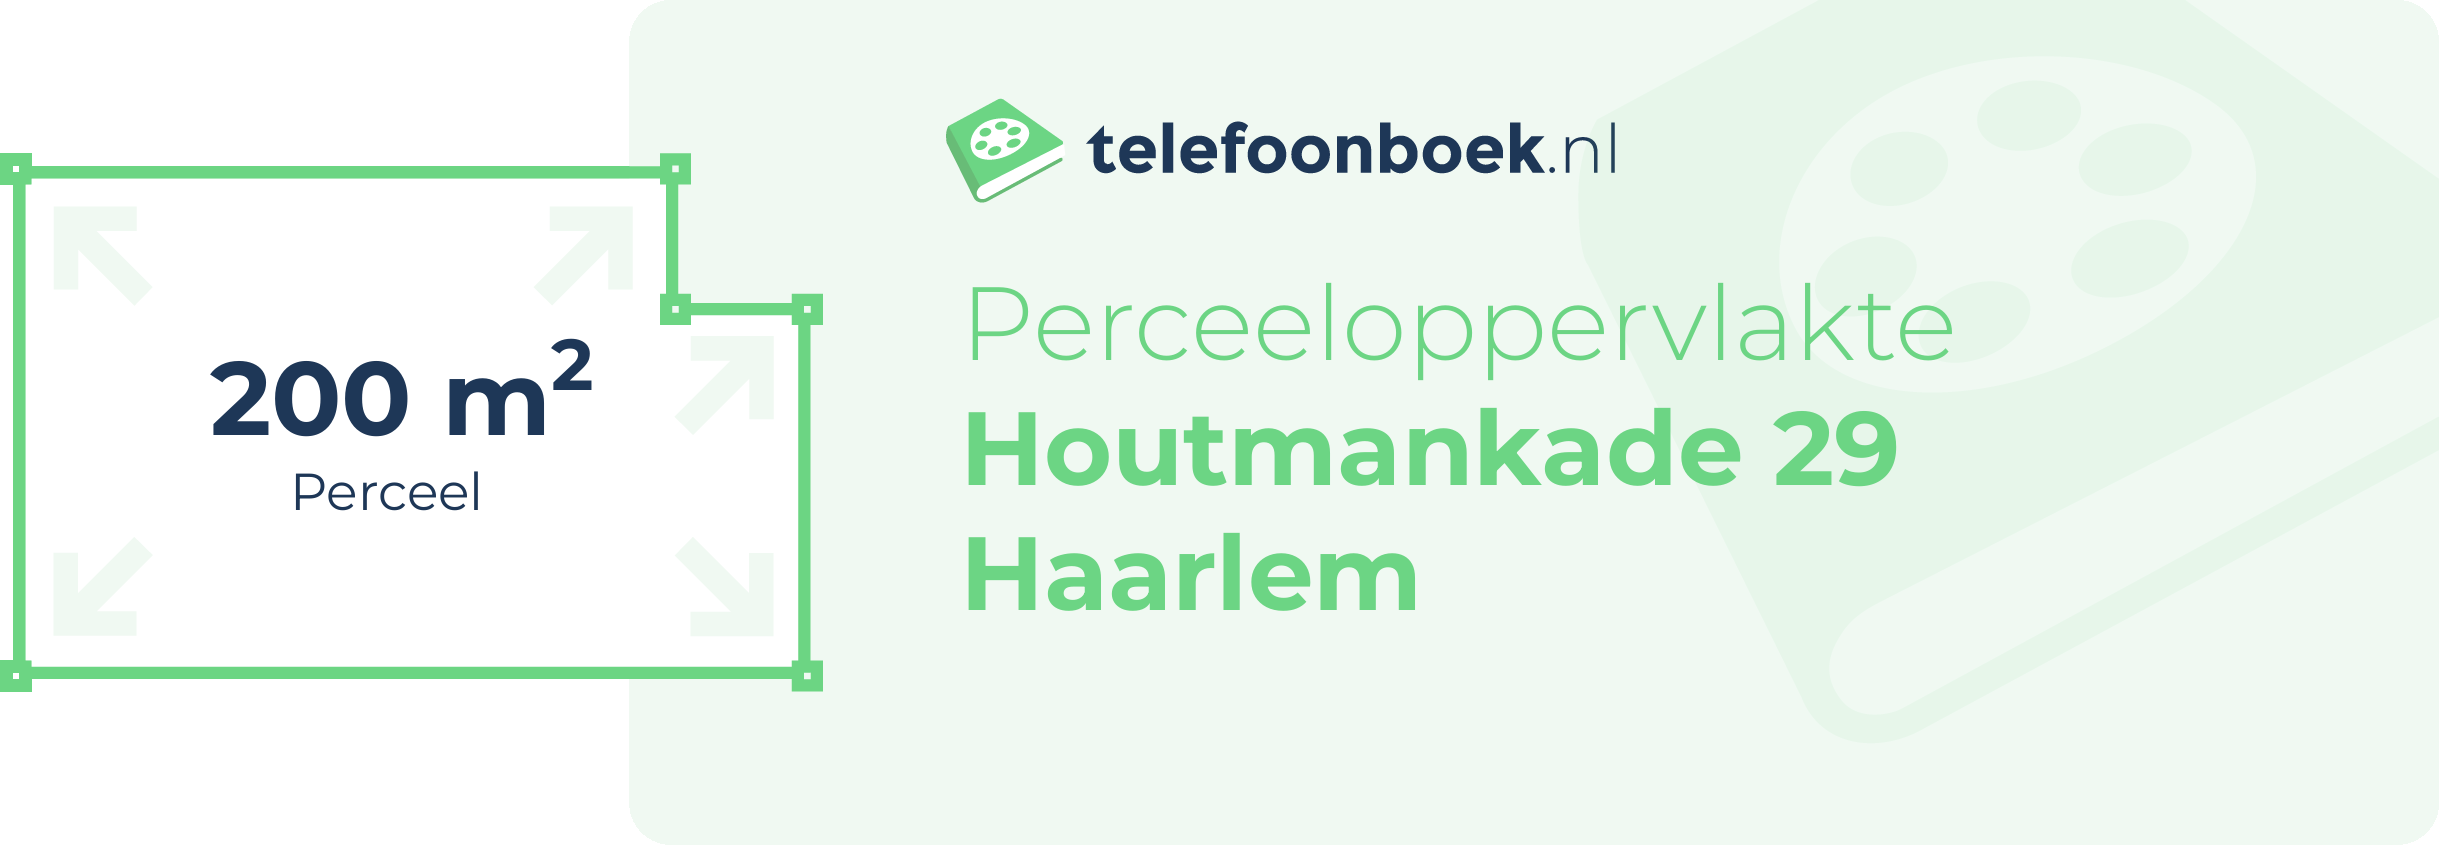 Perceeloppervlakte Houtmankade 29 Haarlem